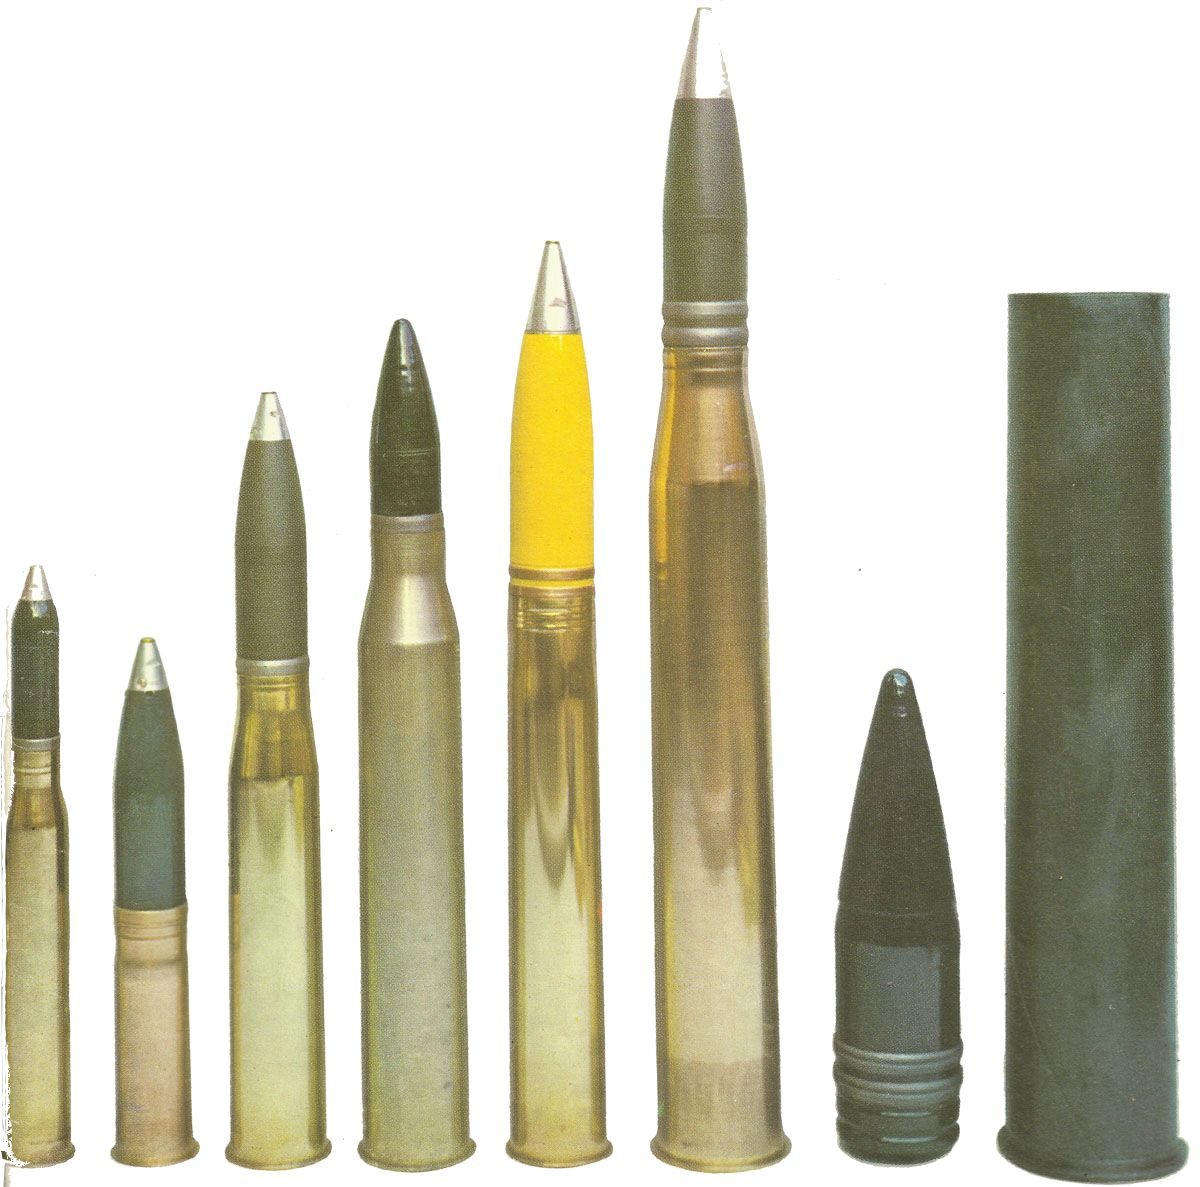 German tank ammunition